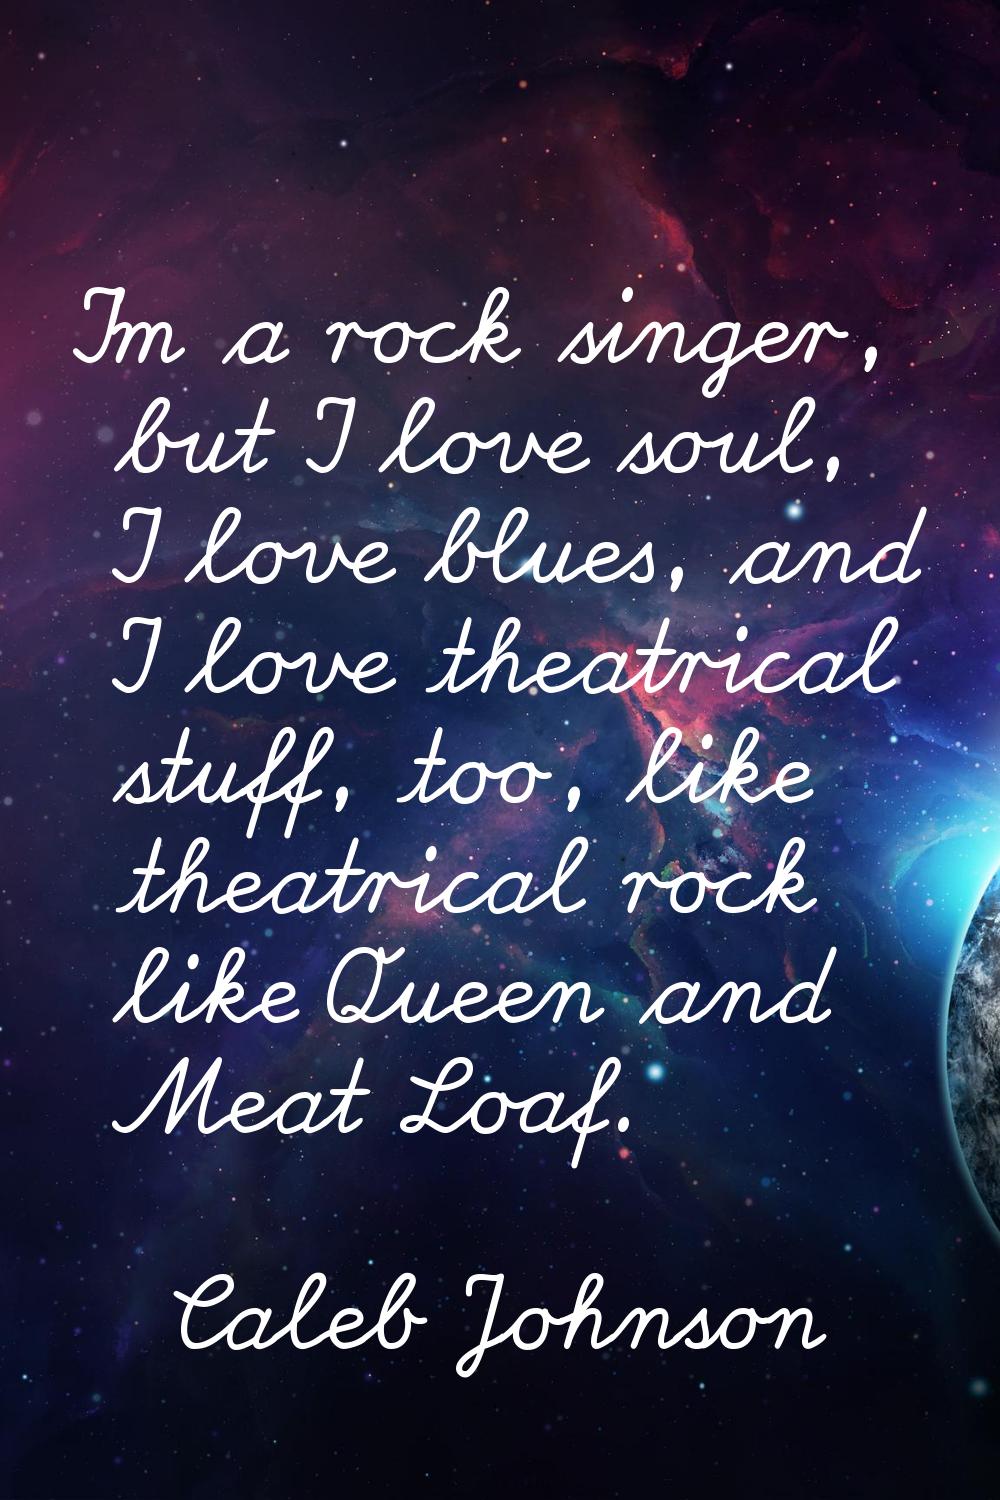 I'm a rock singer, but I love soul, I love blues, and I love theatrical stuff, too, like theatrical